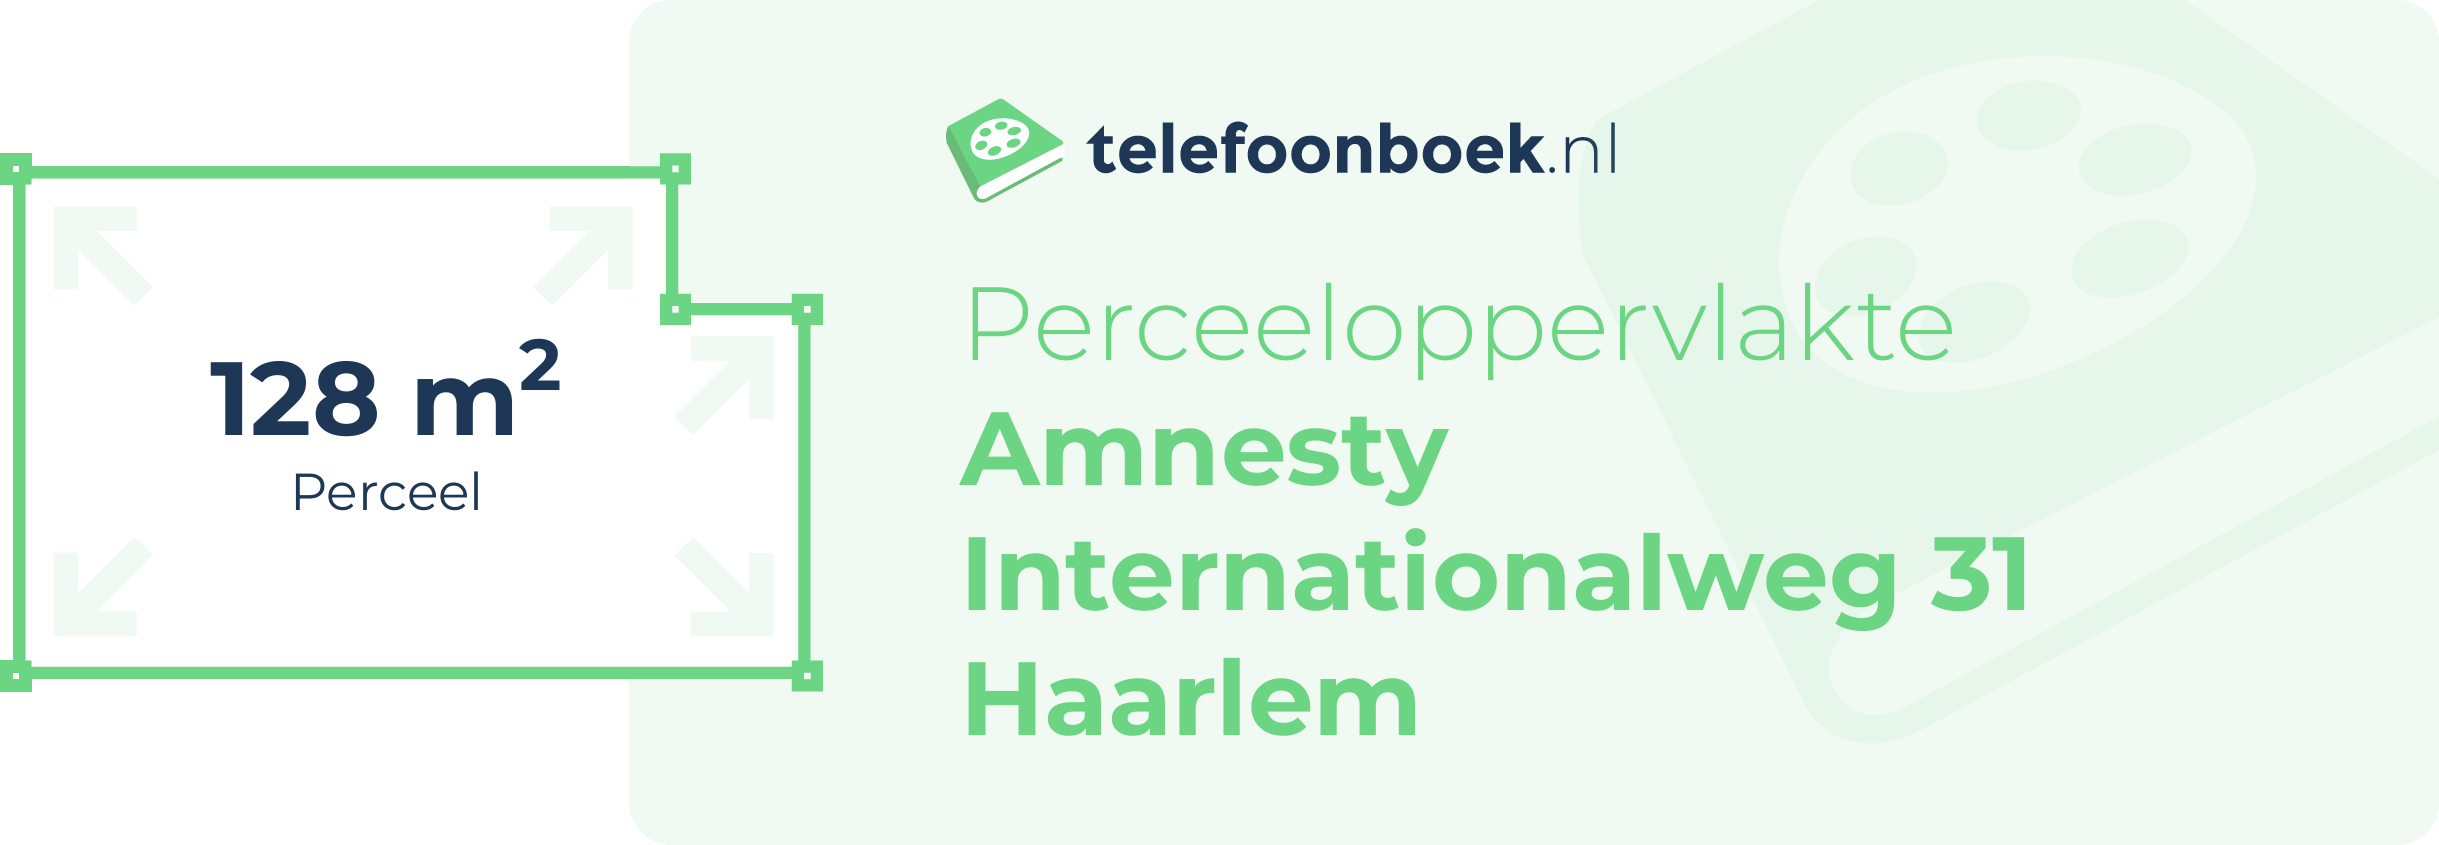 Perceeloppervlakte Amnesty Internationalweg 31 Haarlem